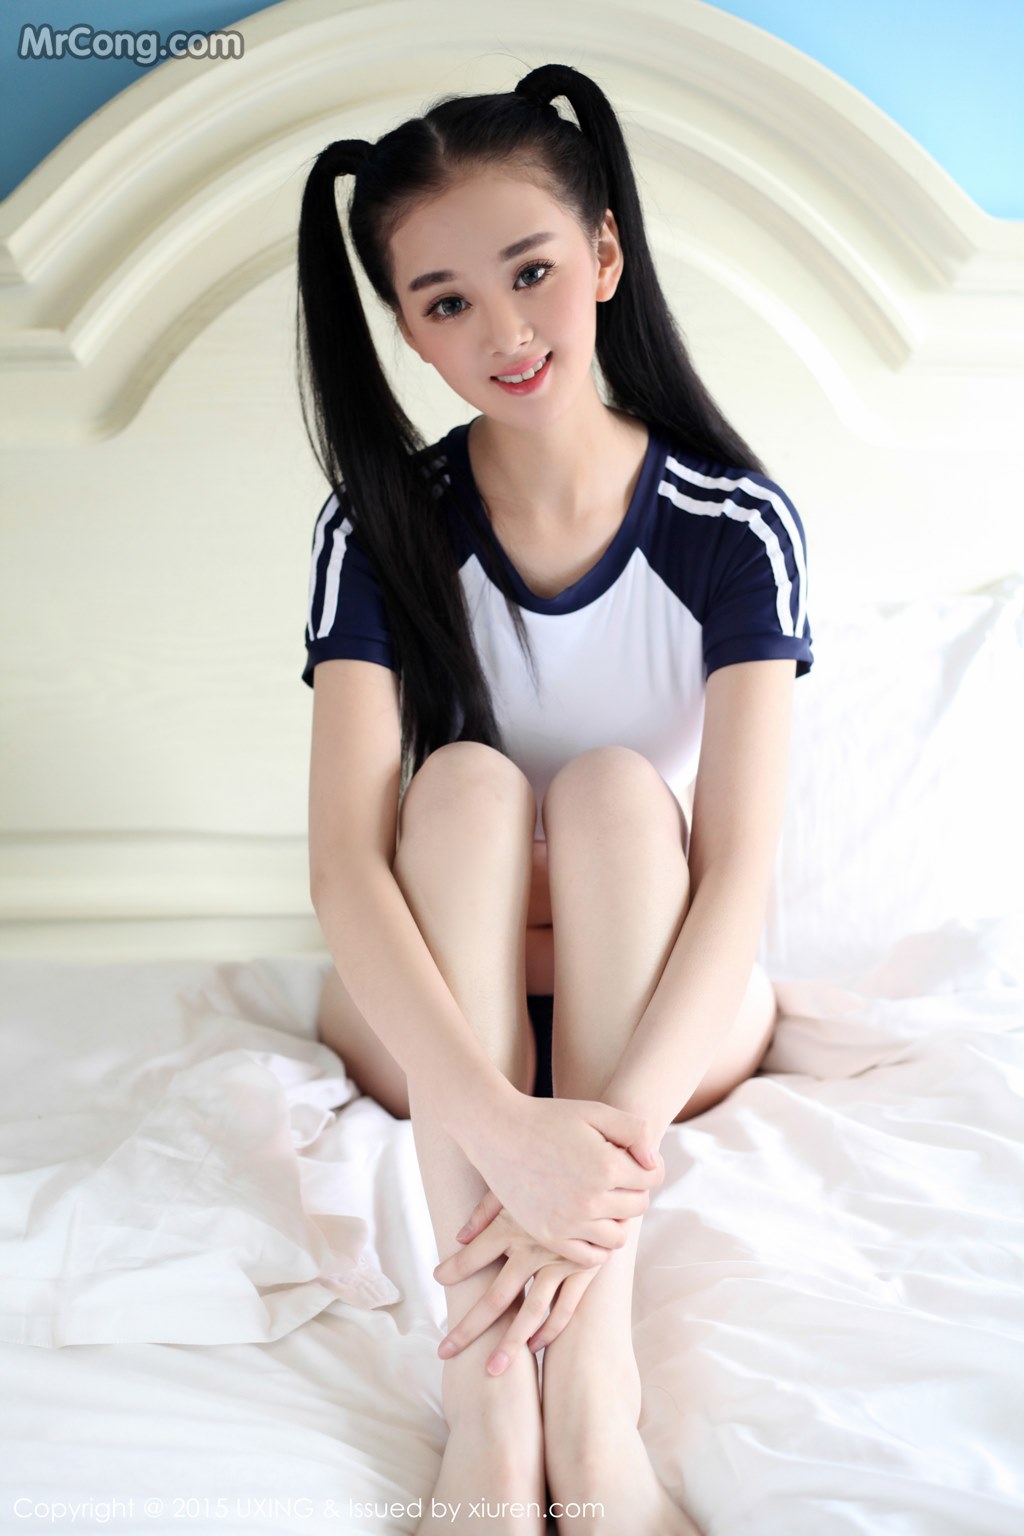 UXING Vol.027: Model Wen Xin Baby (温馨 baby) (45 pictures) photo 1-7